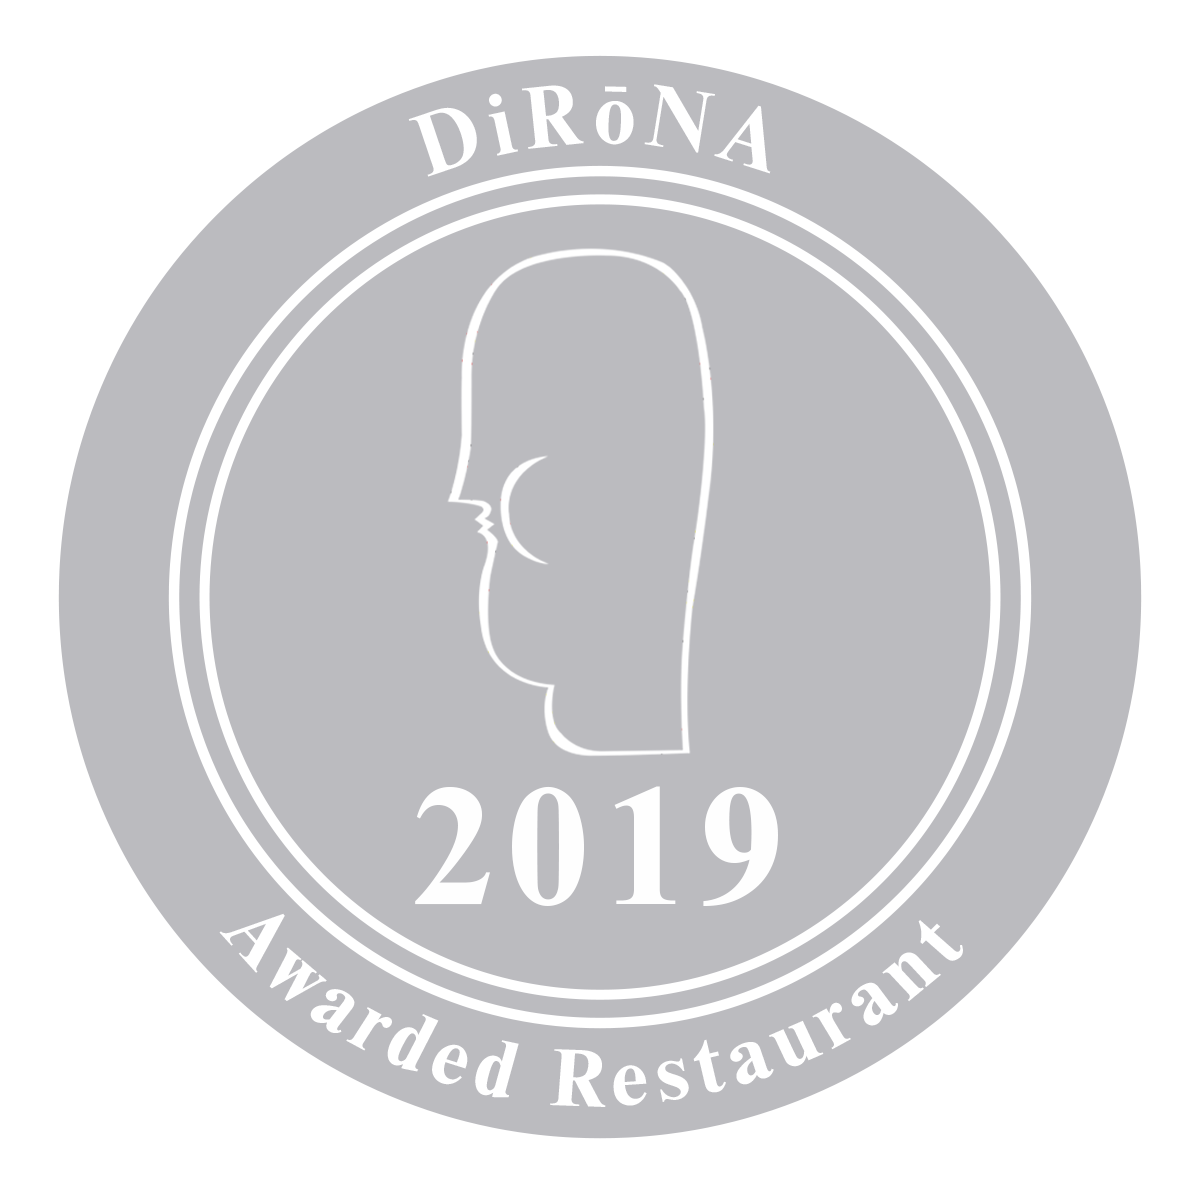 DiRoNA Awarded Restaurant Distinguished Restaurants of North America Since 2018 Badge